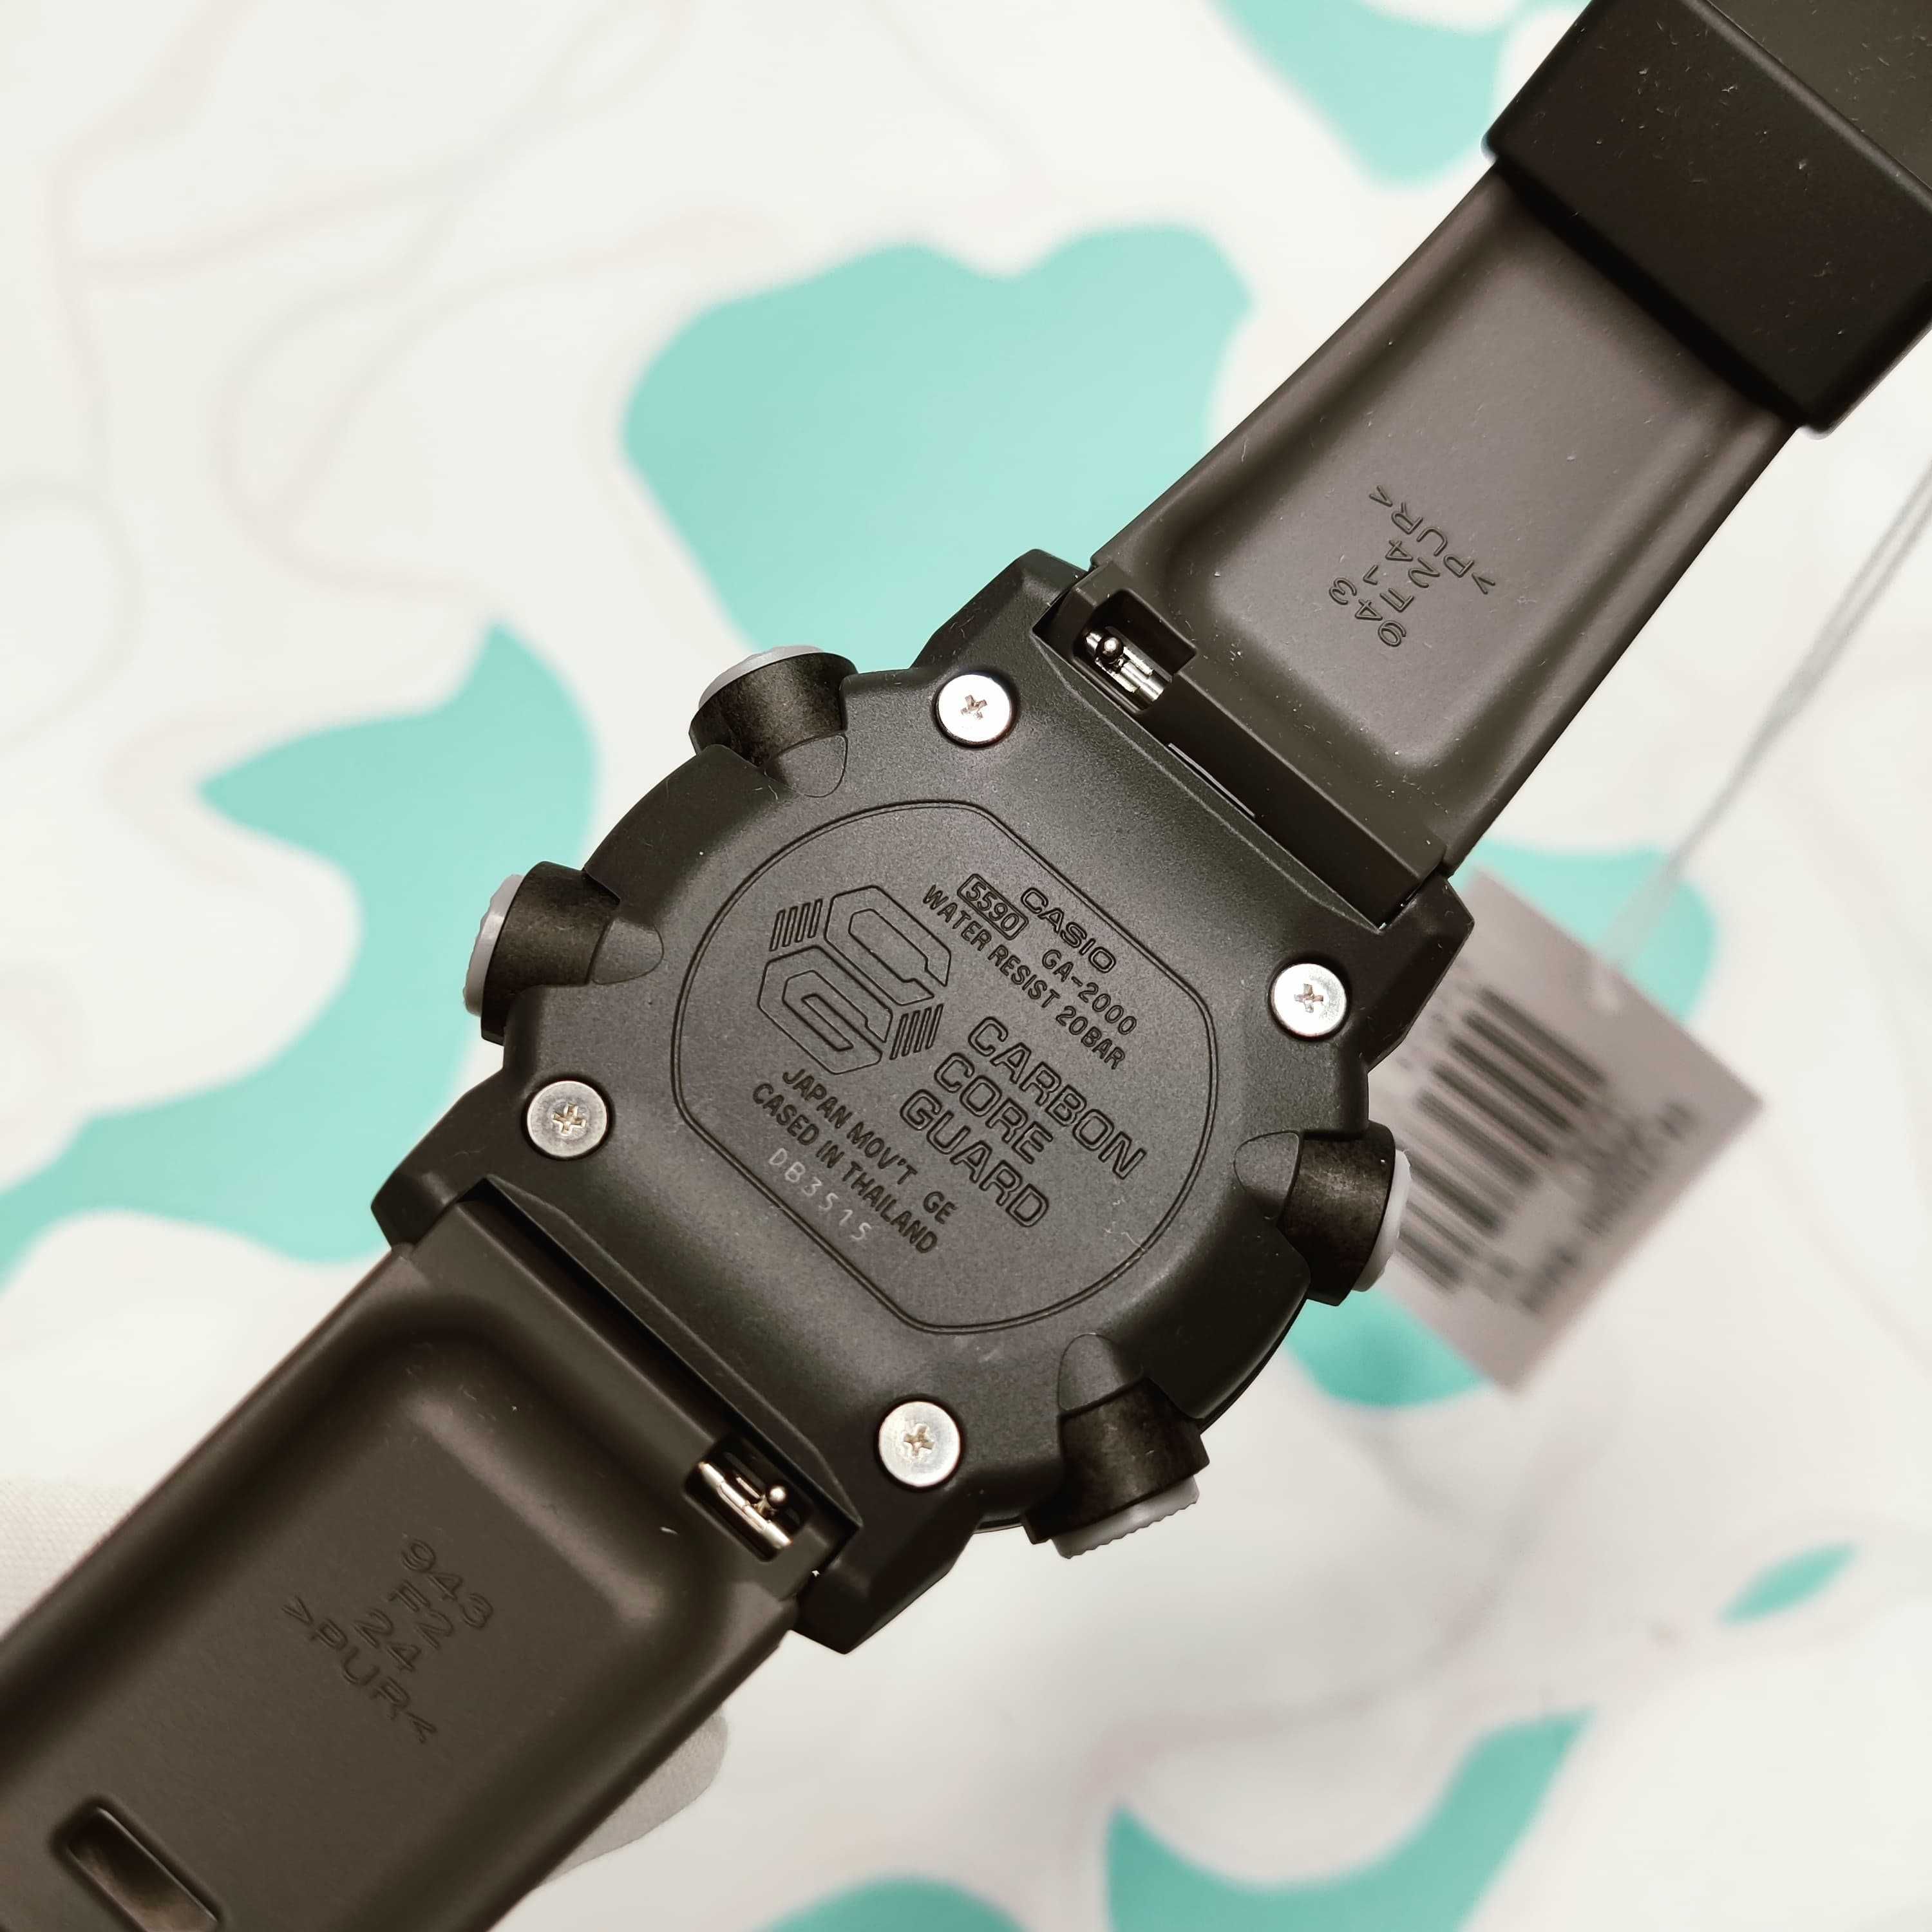 GA-2000HD-8A наручные часы Casio G-Shock оригинал